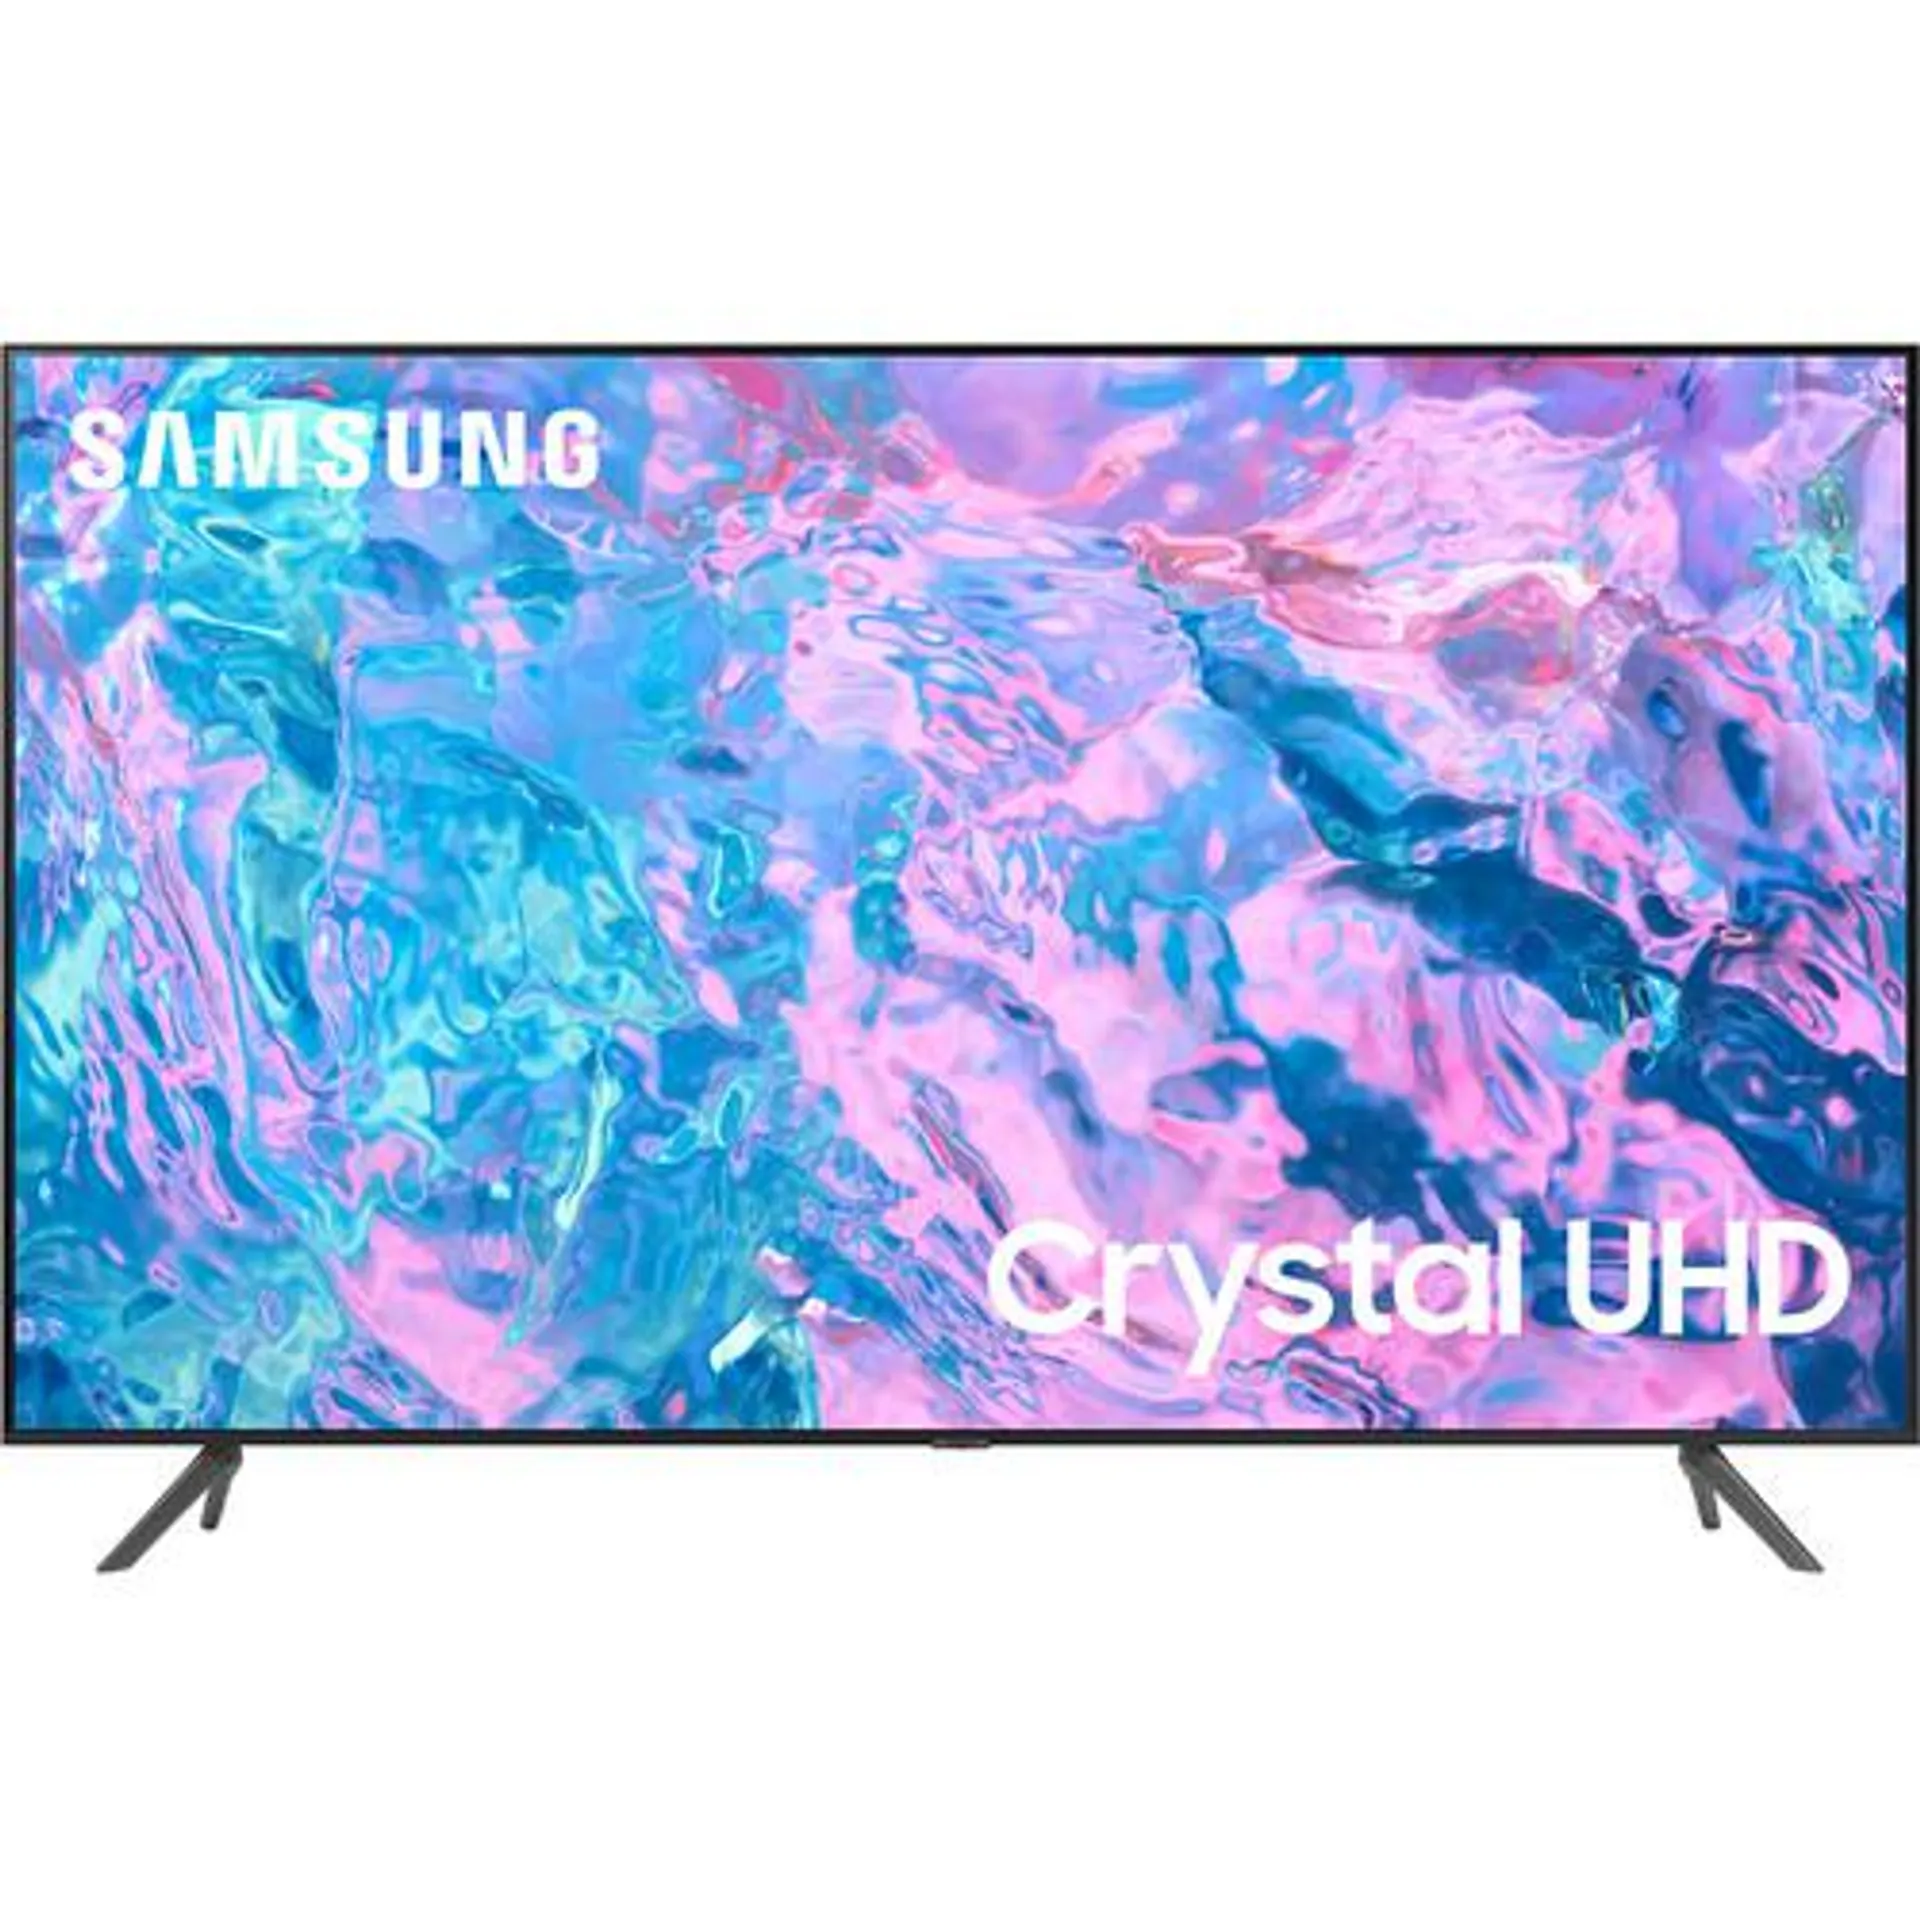 Samsung CU7000 Crystal UHD 50" 4K HDR Smart LED TV